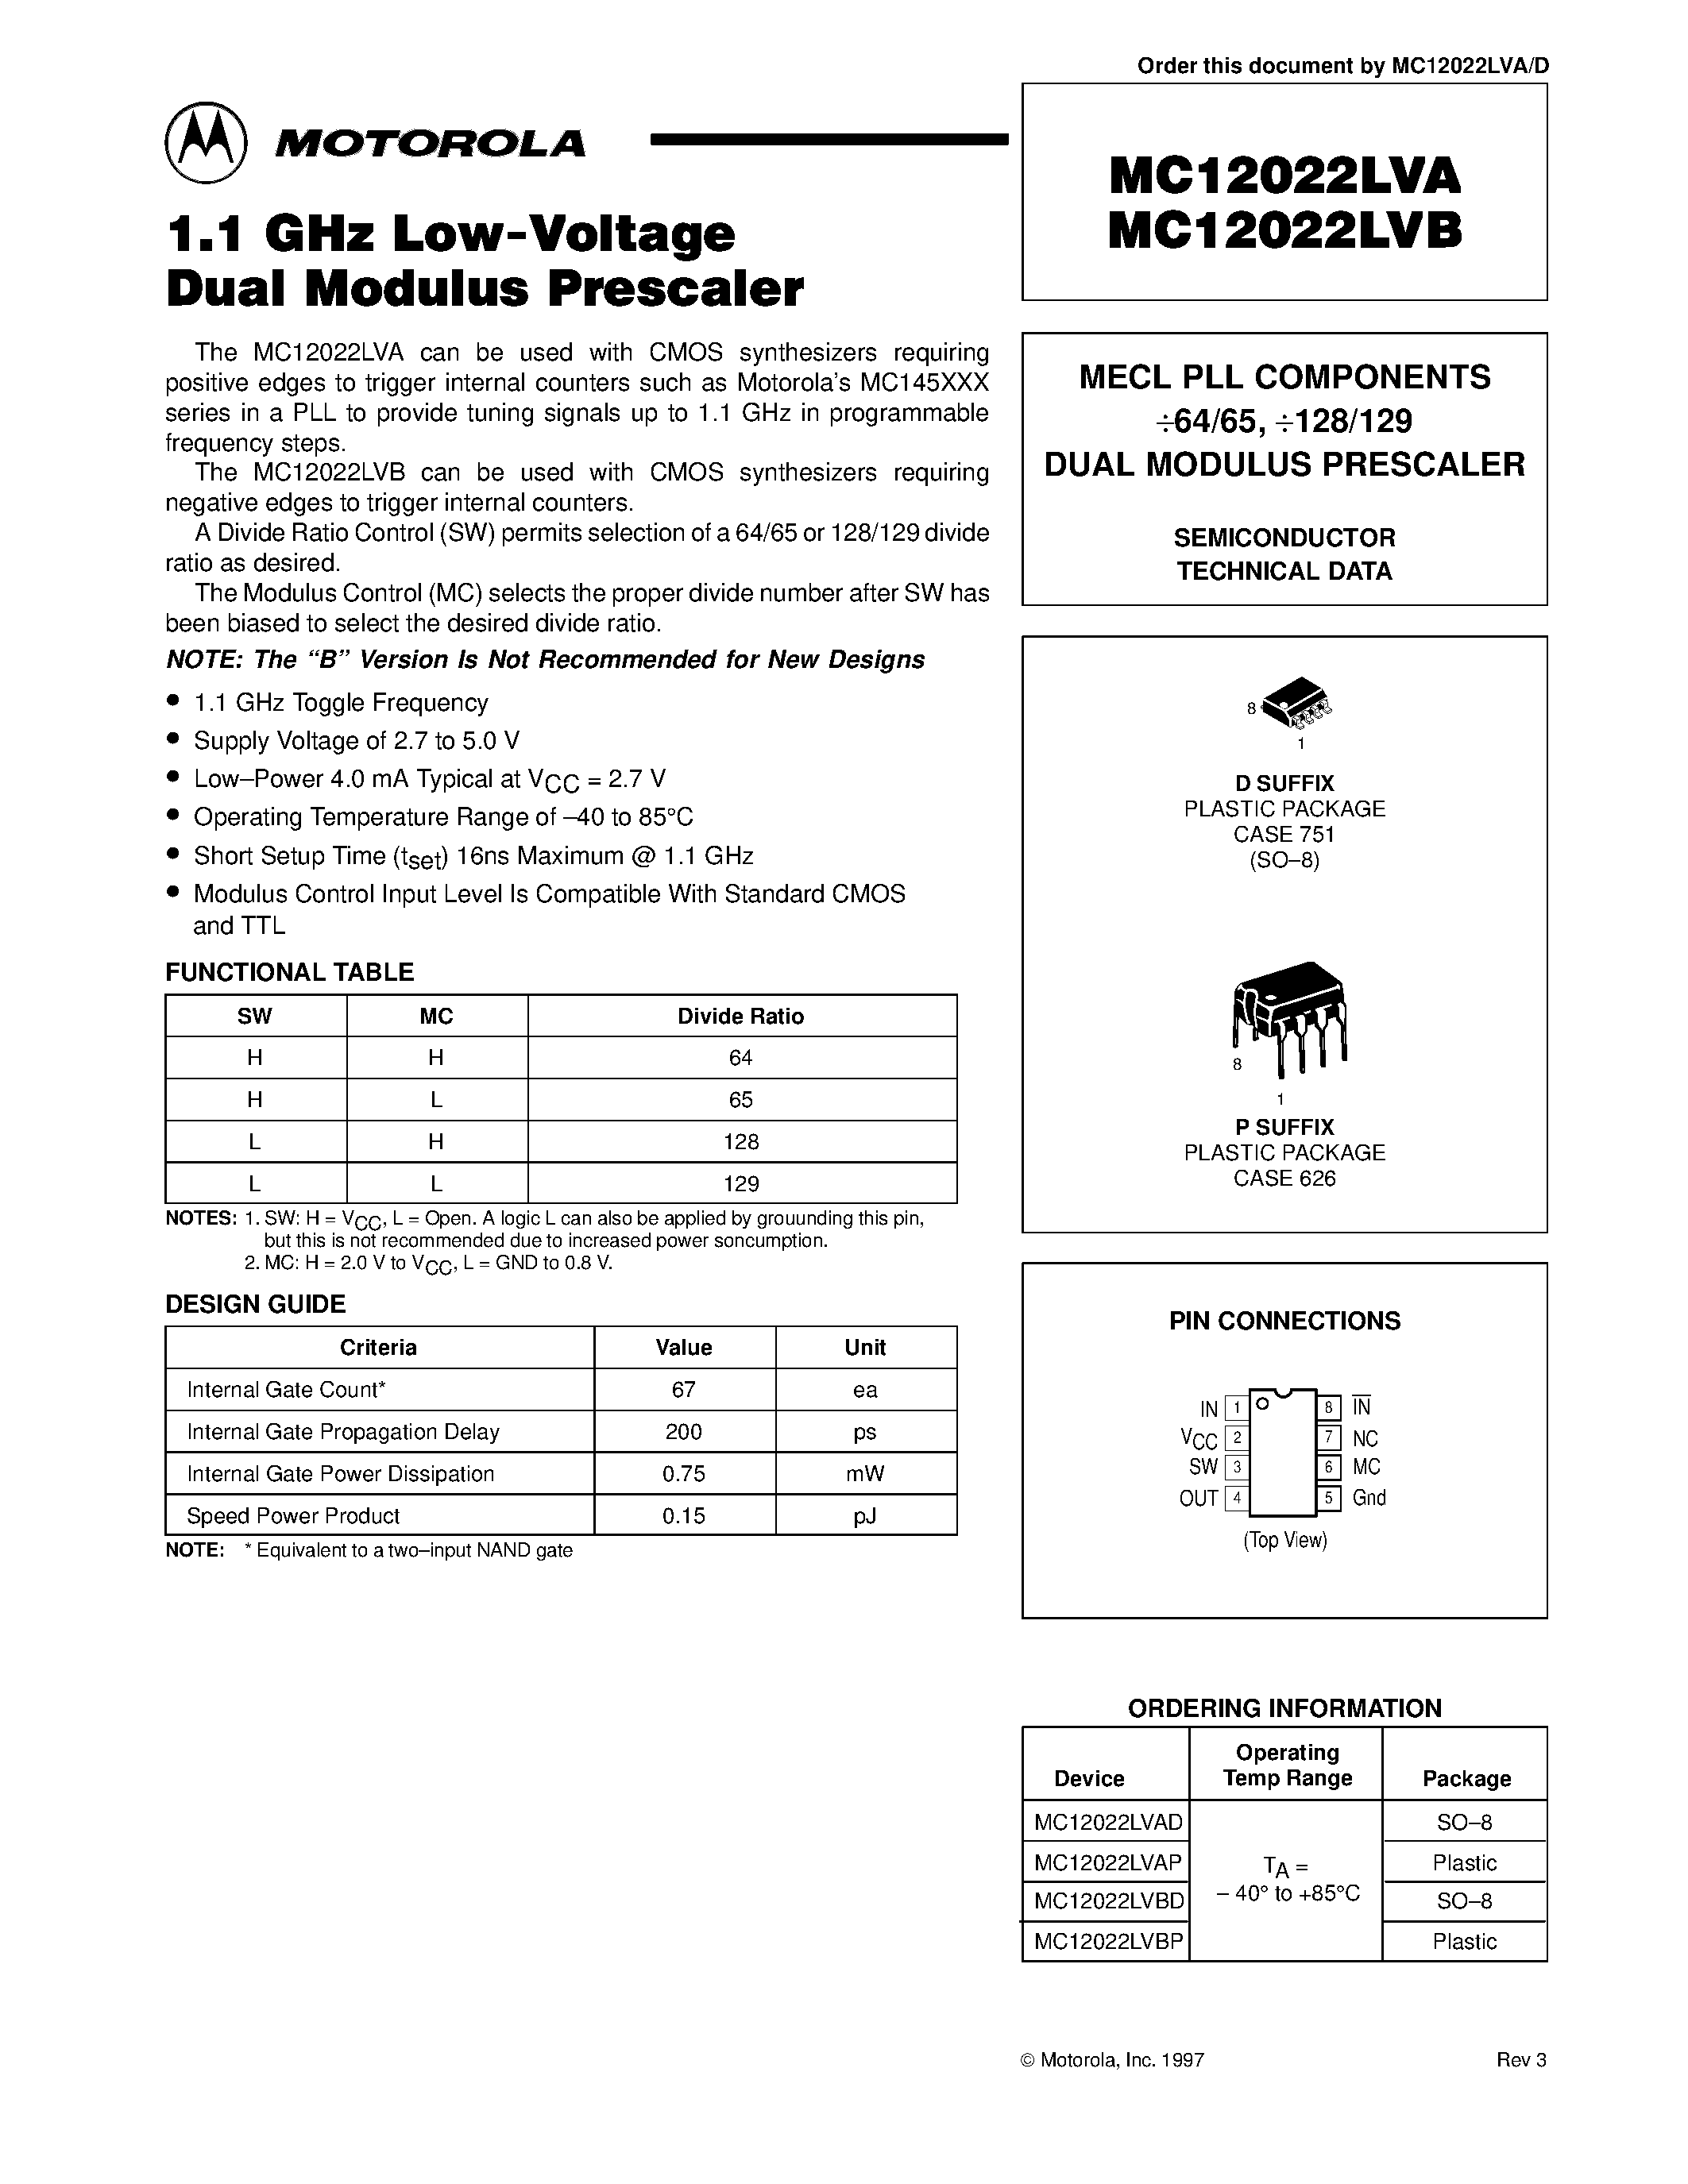 Datasheet MC12022LVBD - MECL PLL COMPONENTS 64/65 / 128/129 DUAL MODULUS PRESCALER page 1